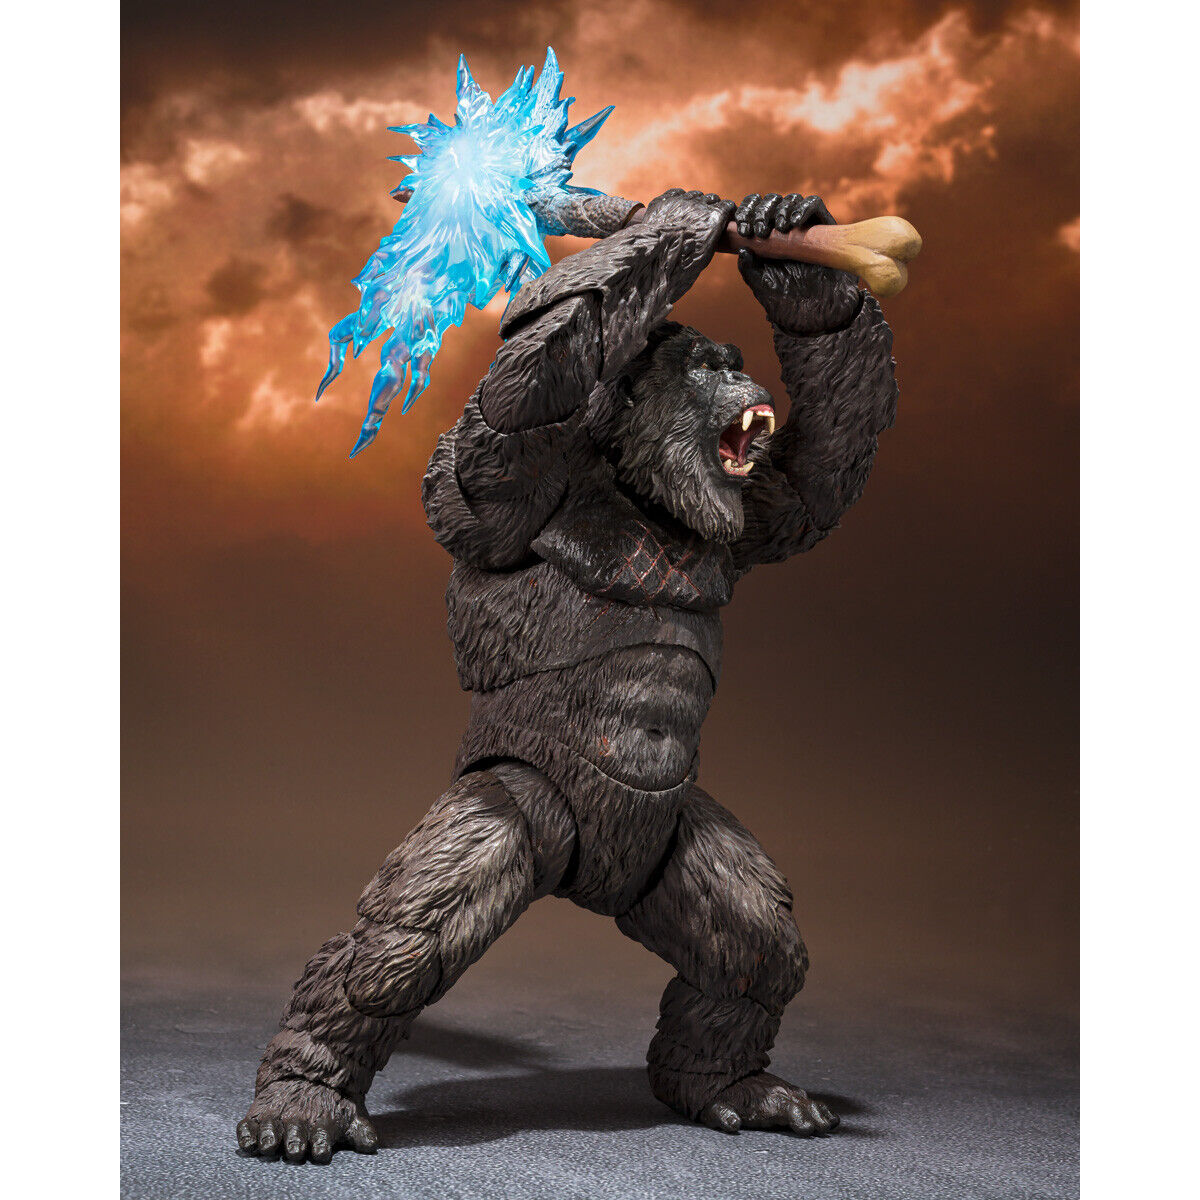 [PRE-ORDER] S.H.MonsterArts Kong From Godzilla Vs. Kong (2021) Exclusive Edition